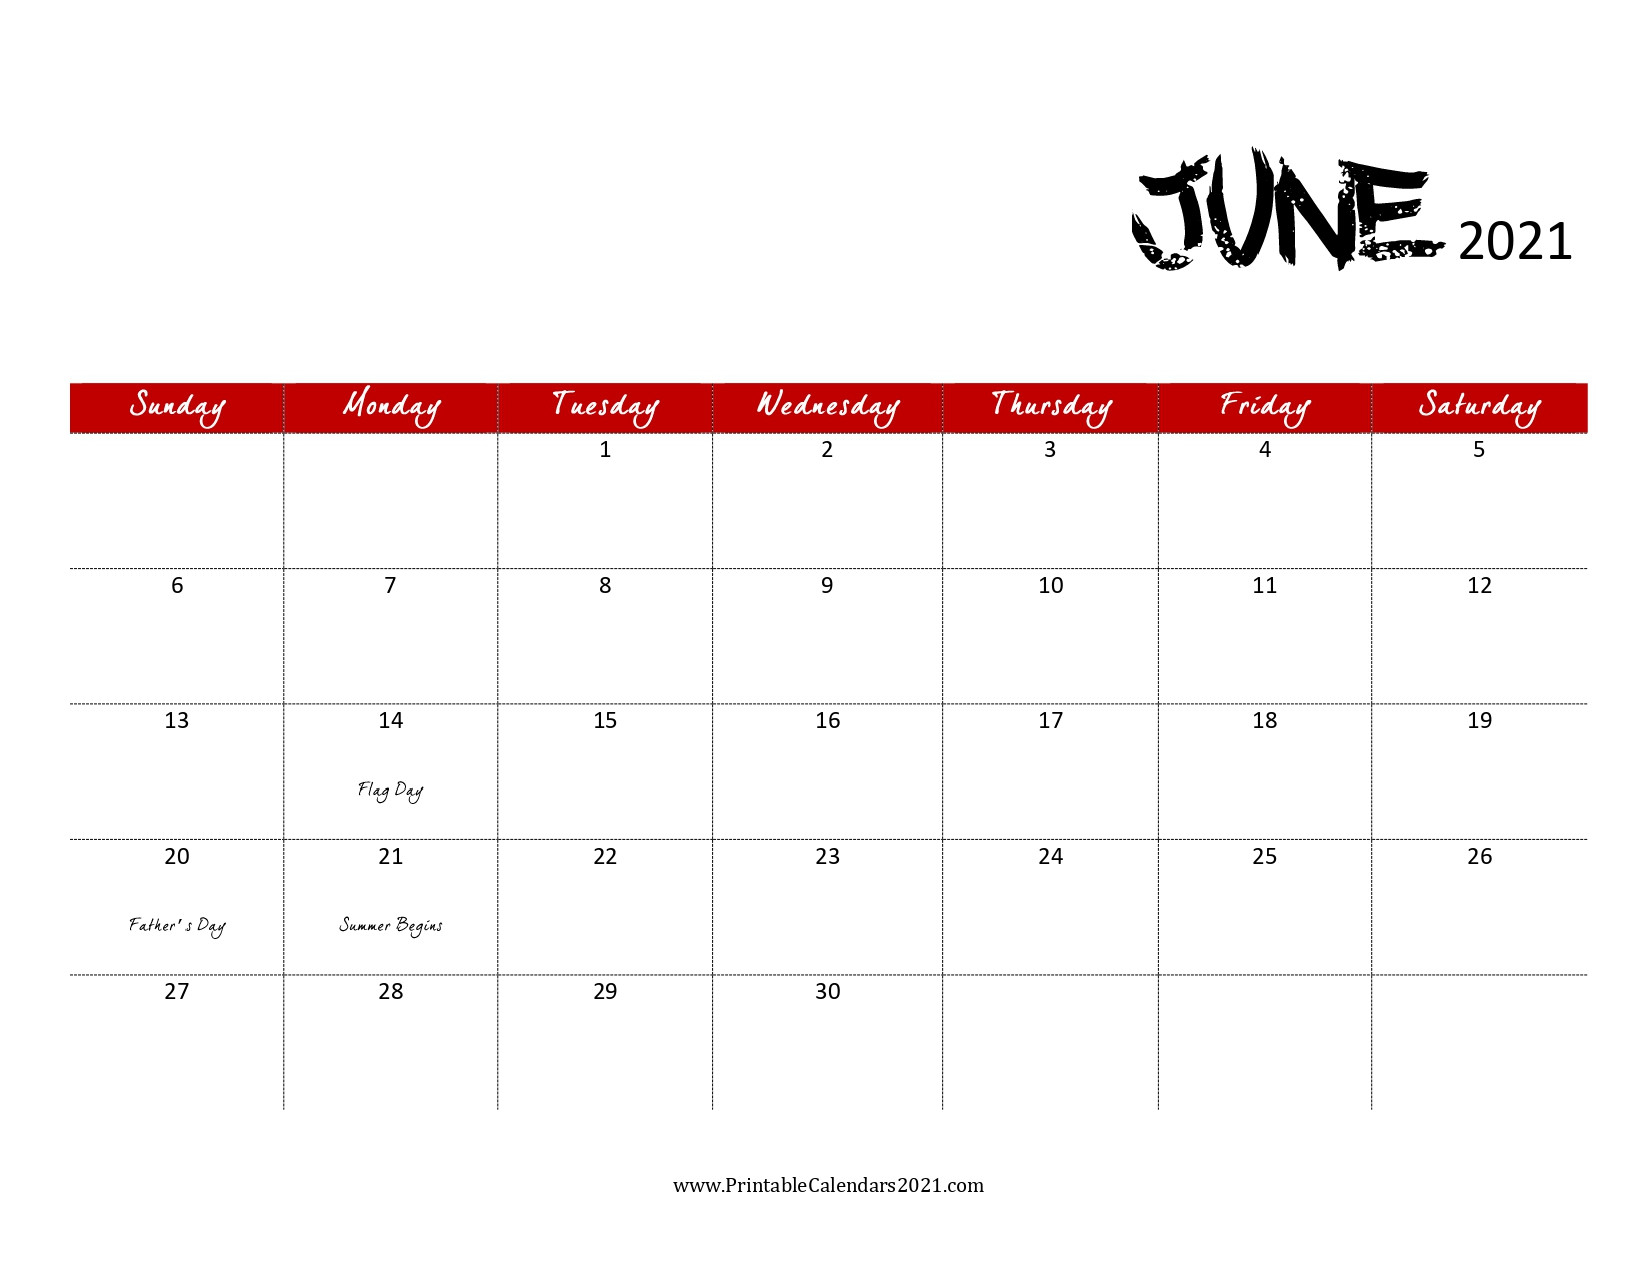 60+ Free June 2021 Calendar Printable With Holidays, Blank-Printable Calendar June -October 2021